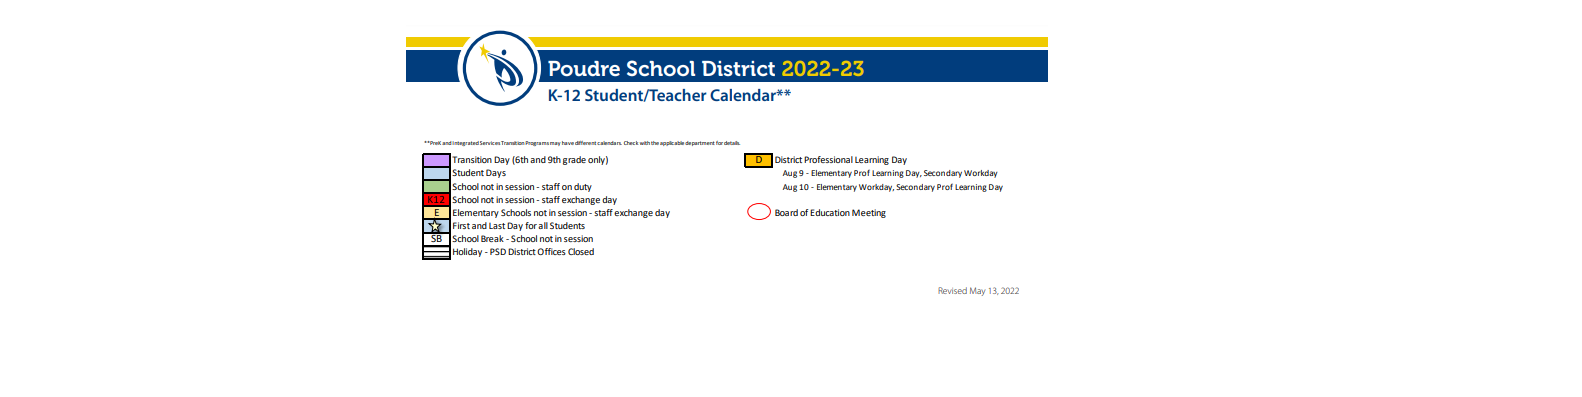 District School Academic Calendar Key for Dunn Elementary School